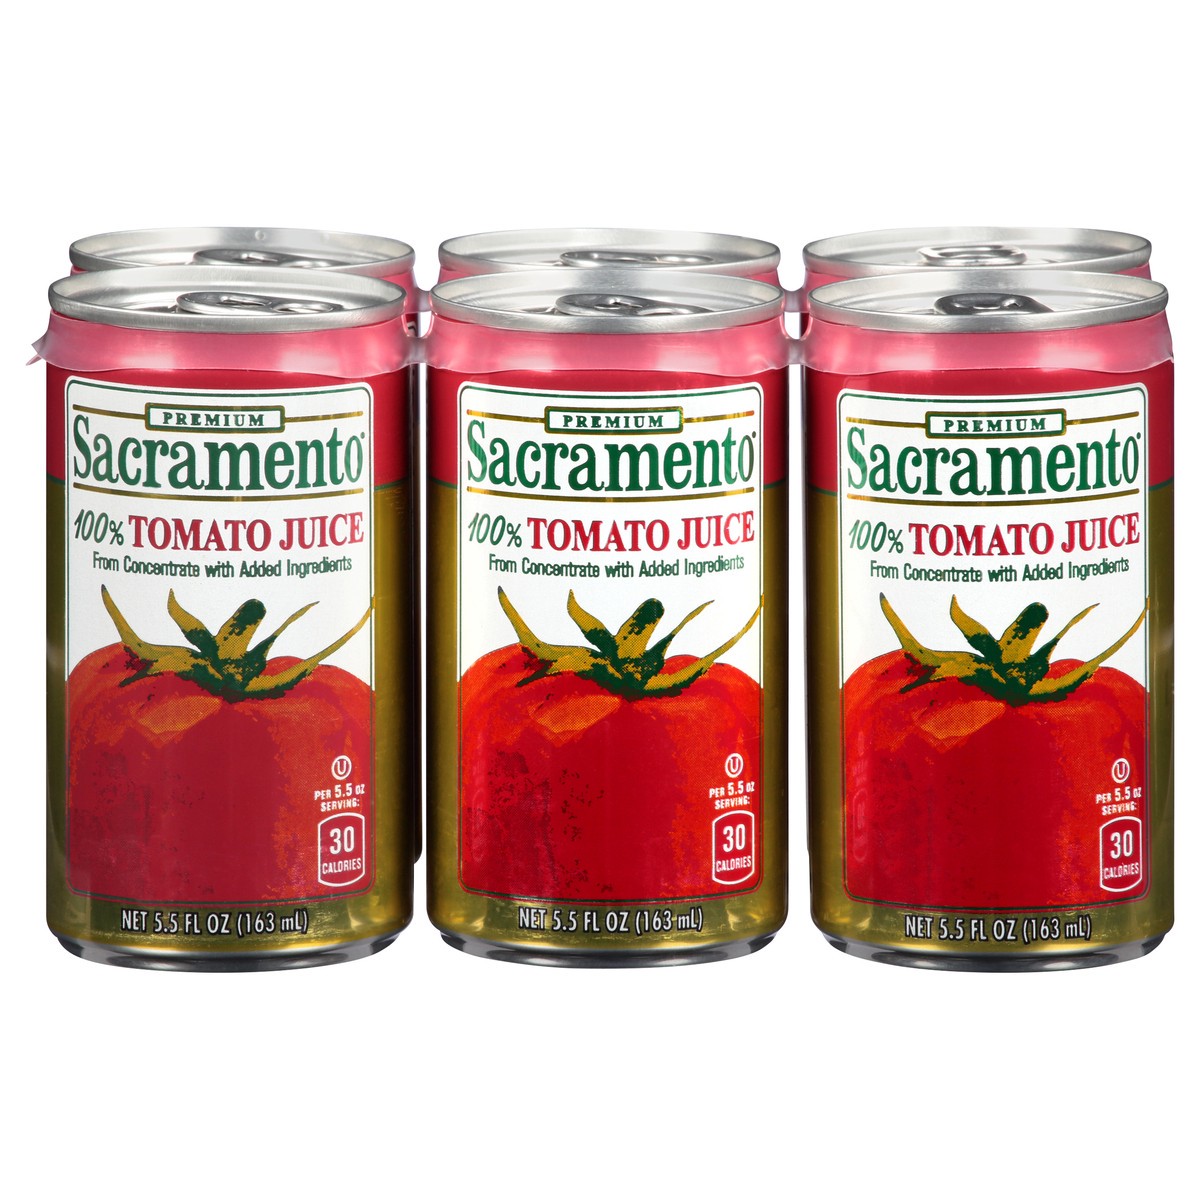 slide 1 of 14, Sacramento Premium 100% Tomato Juice 6-5.5 fl. oz. Cans, 6 ct